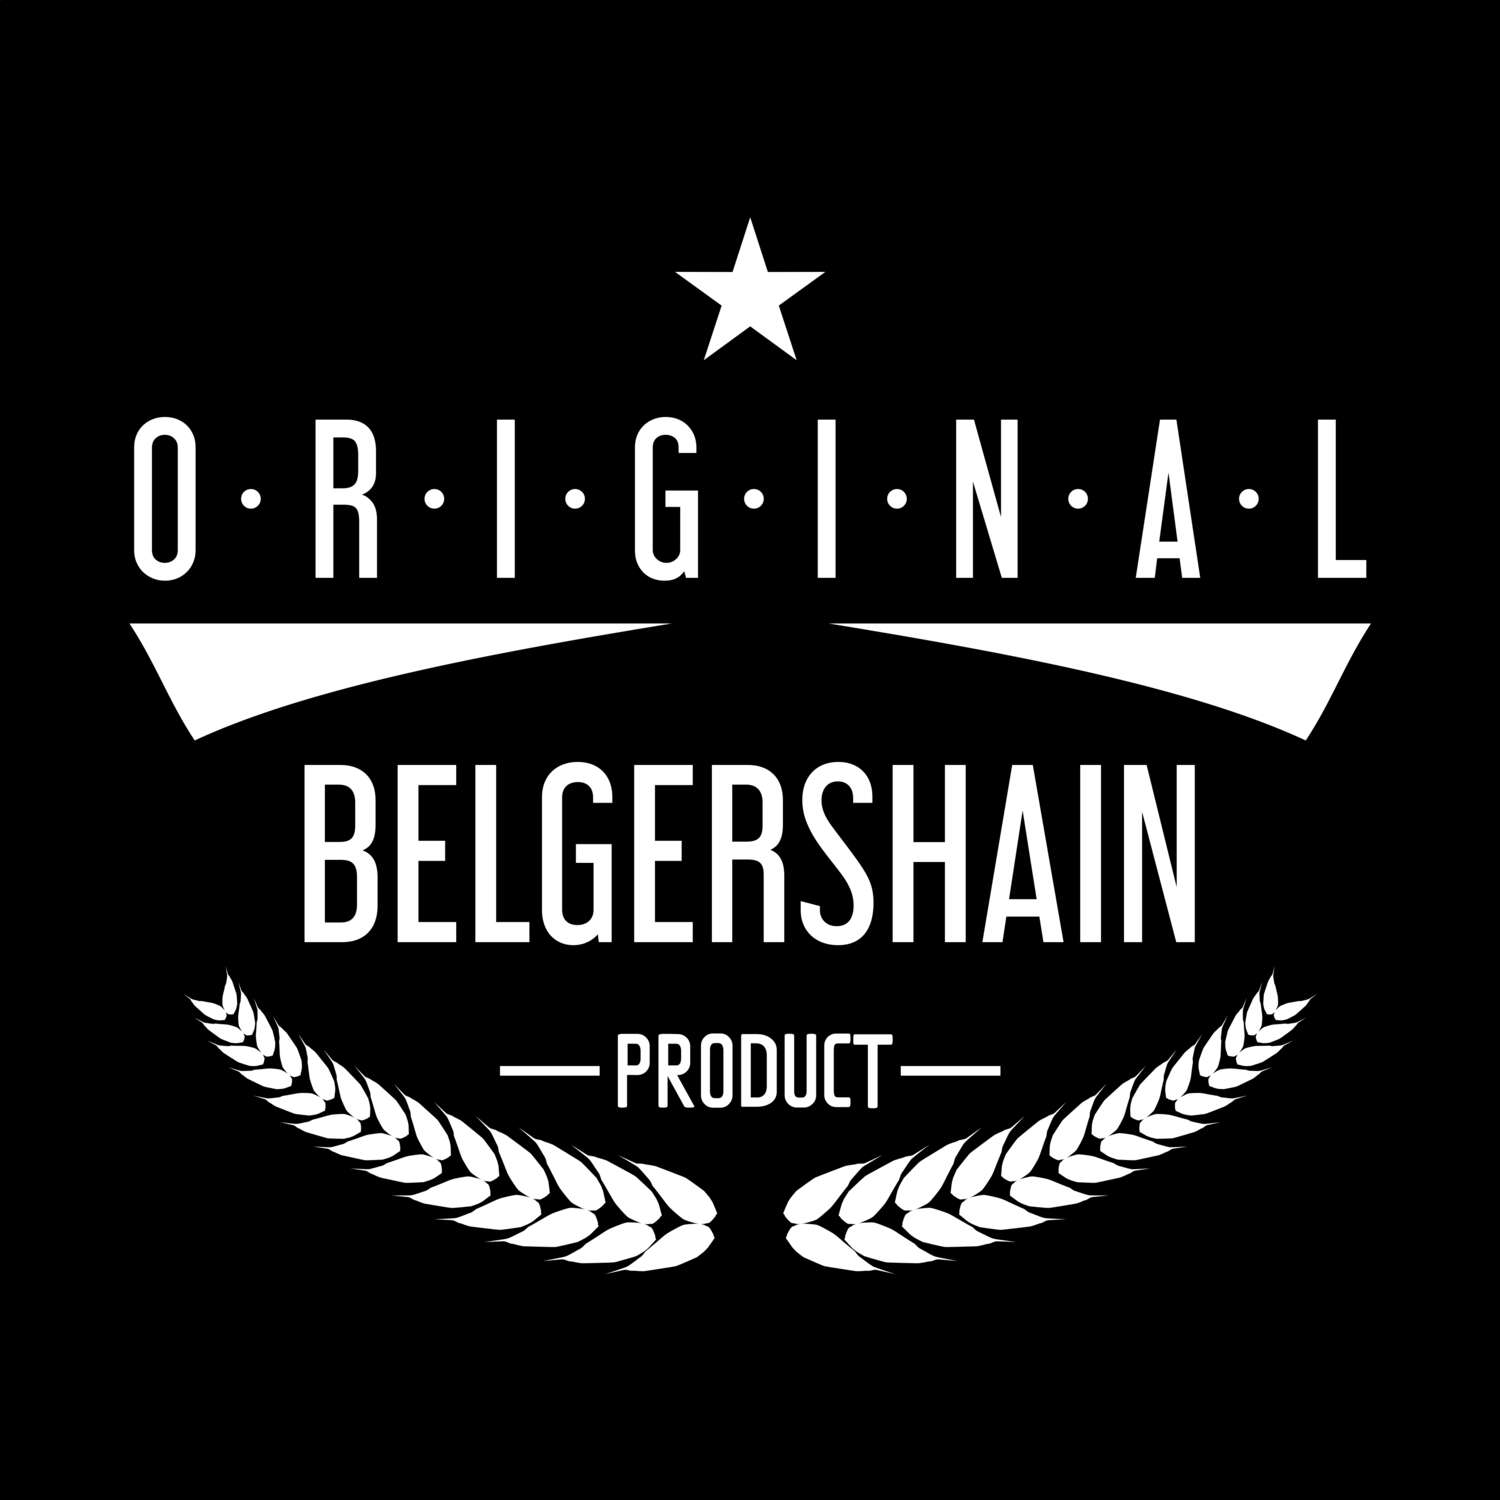 Belgershain T-Shirt »Original Product«